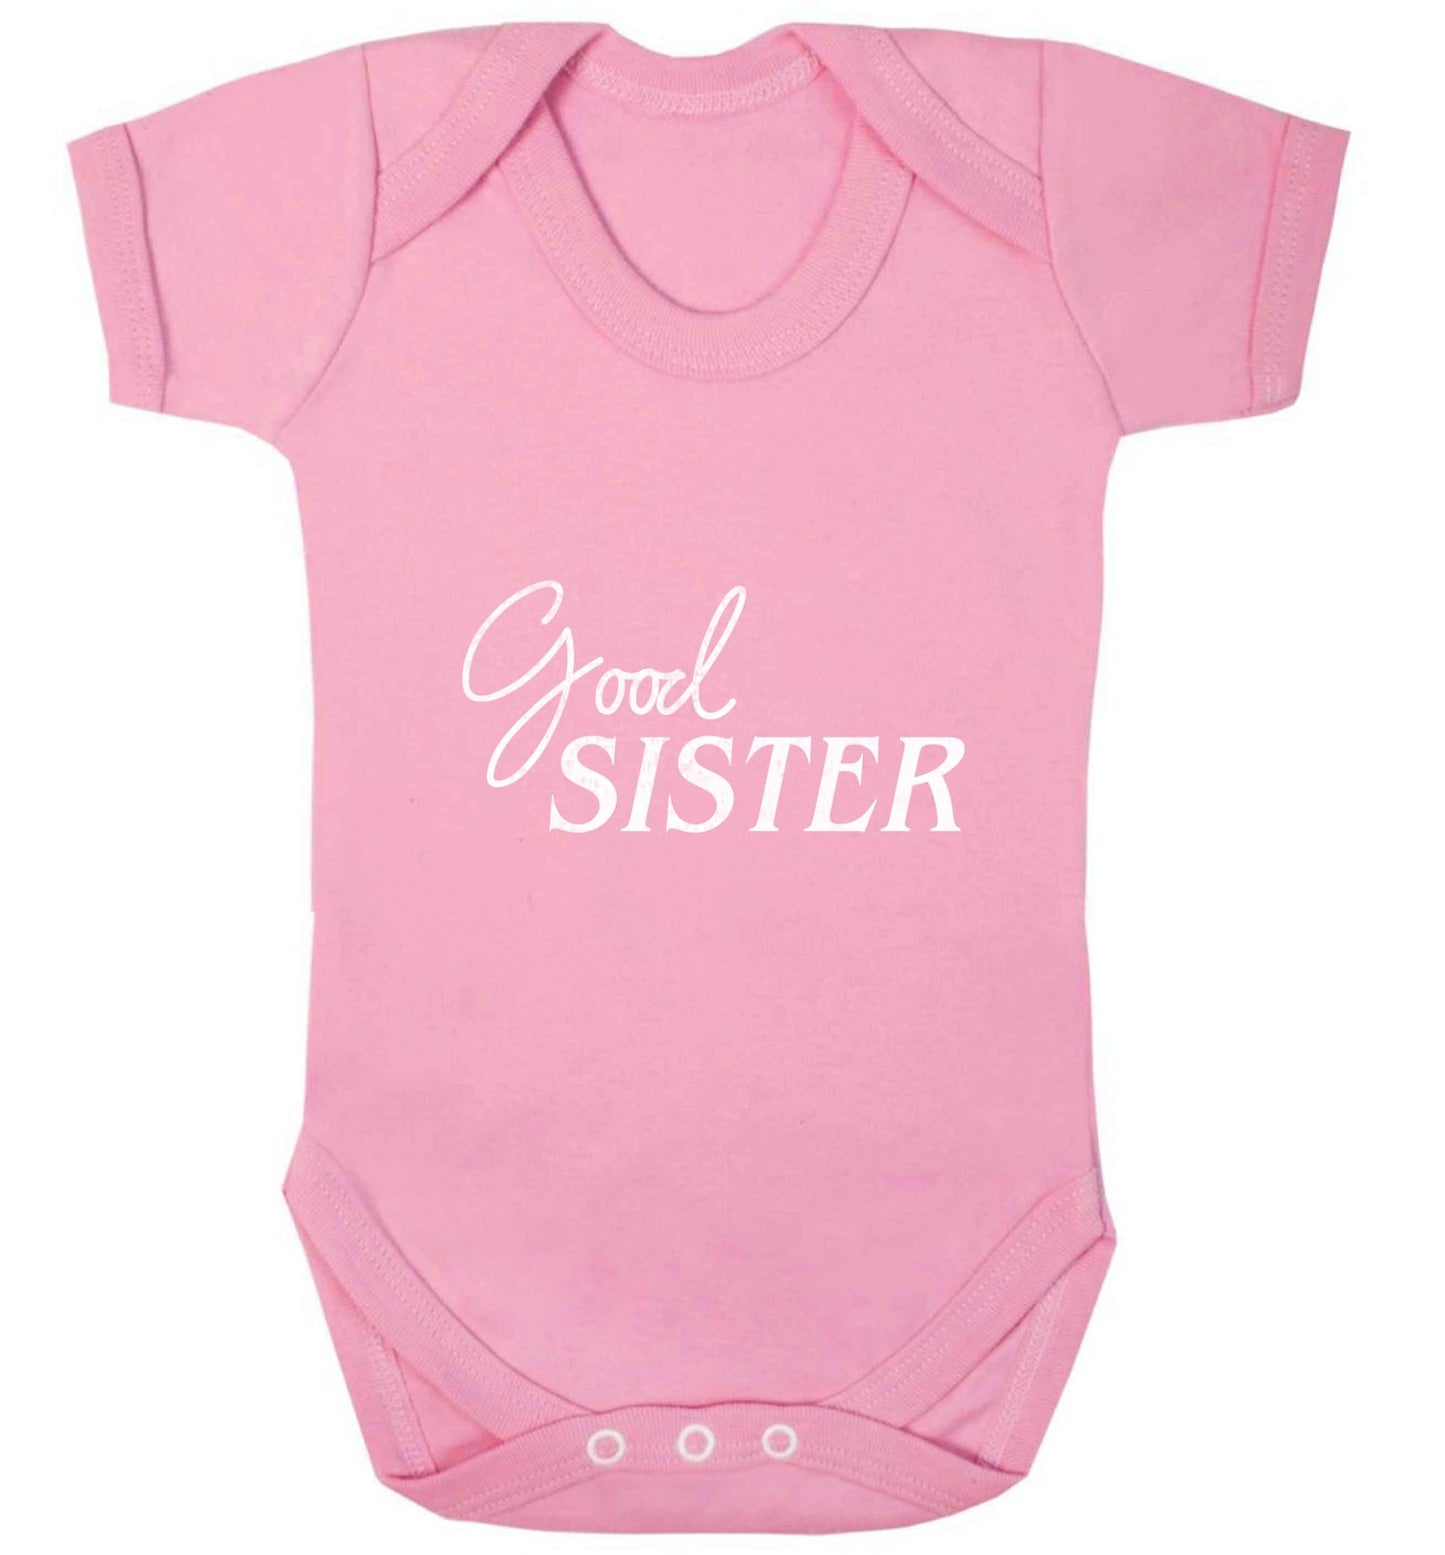 Good sister baby vest pale pink 18-24 months